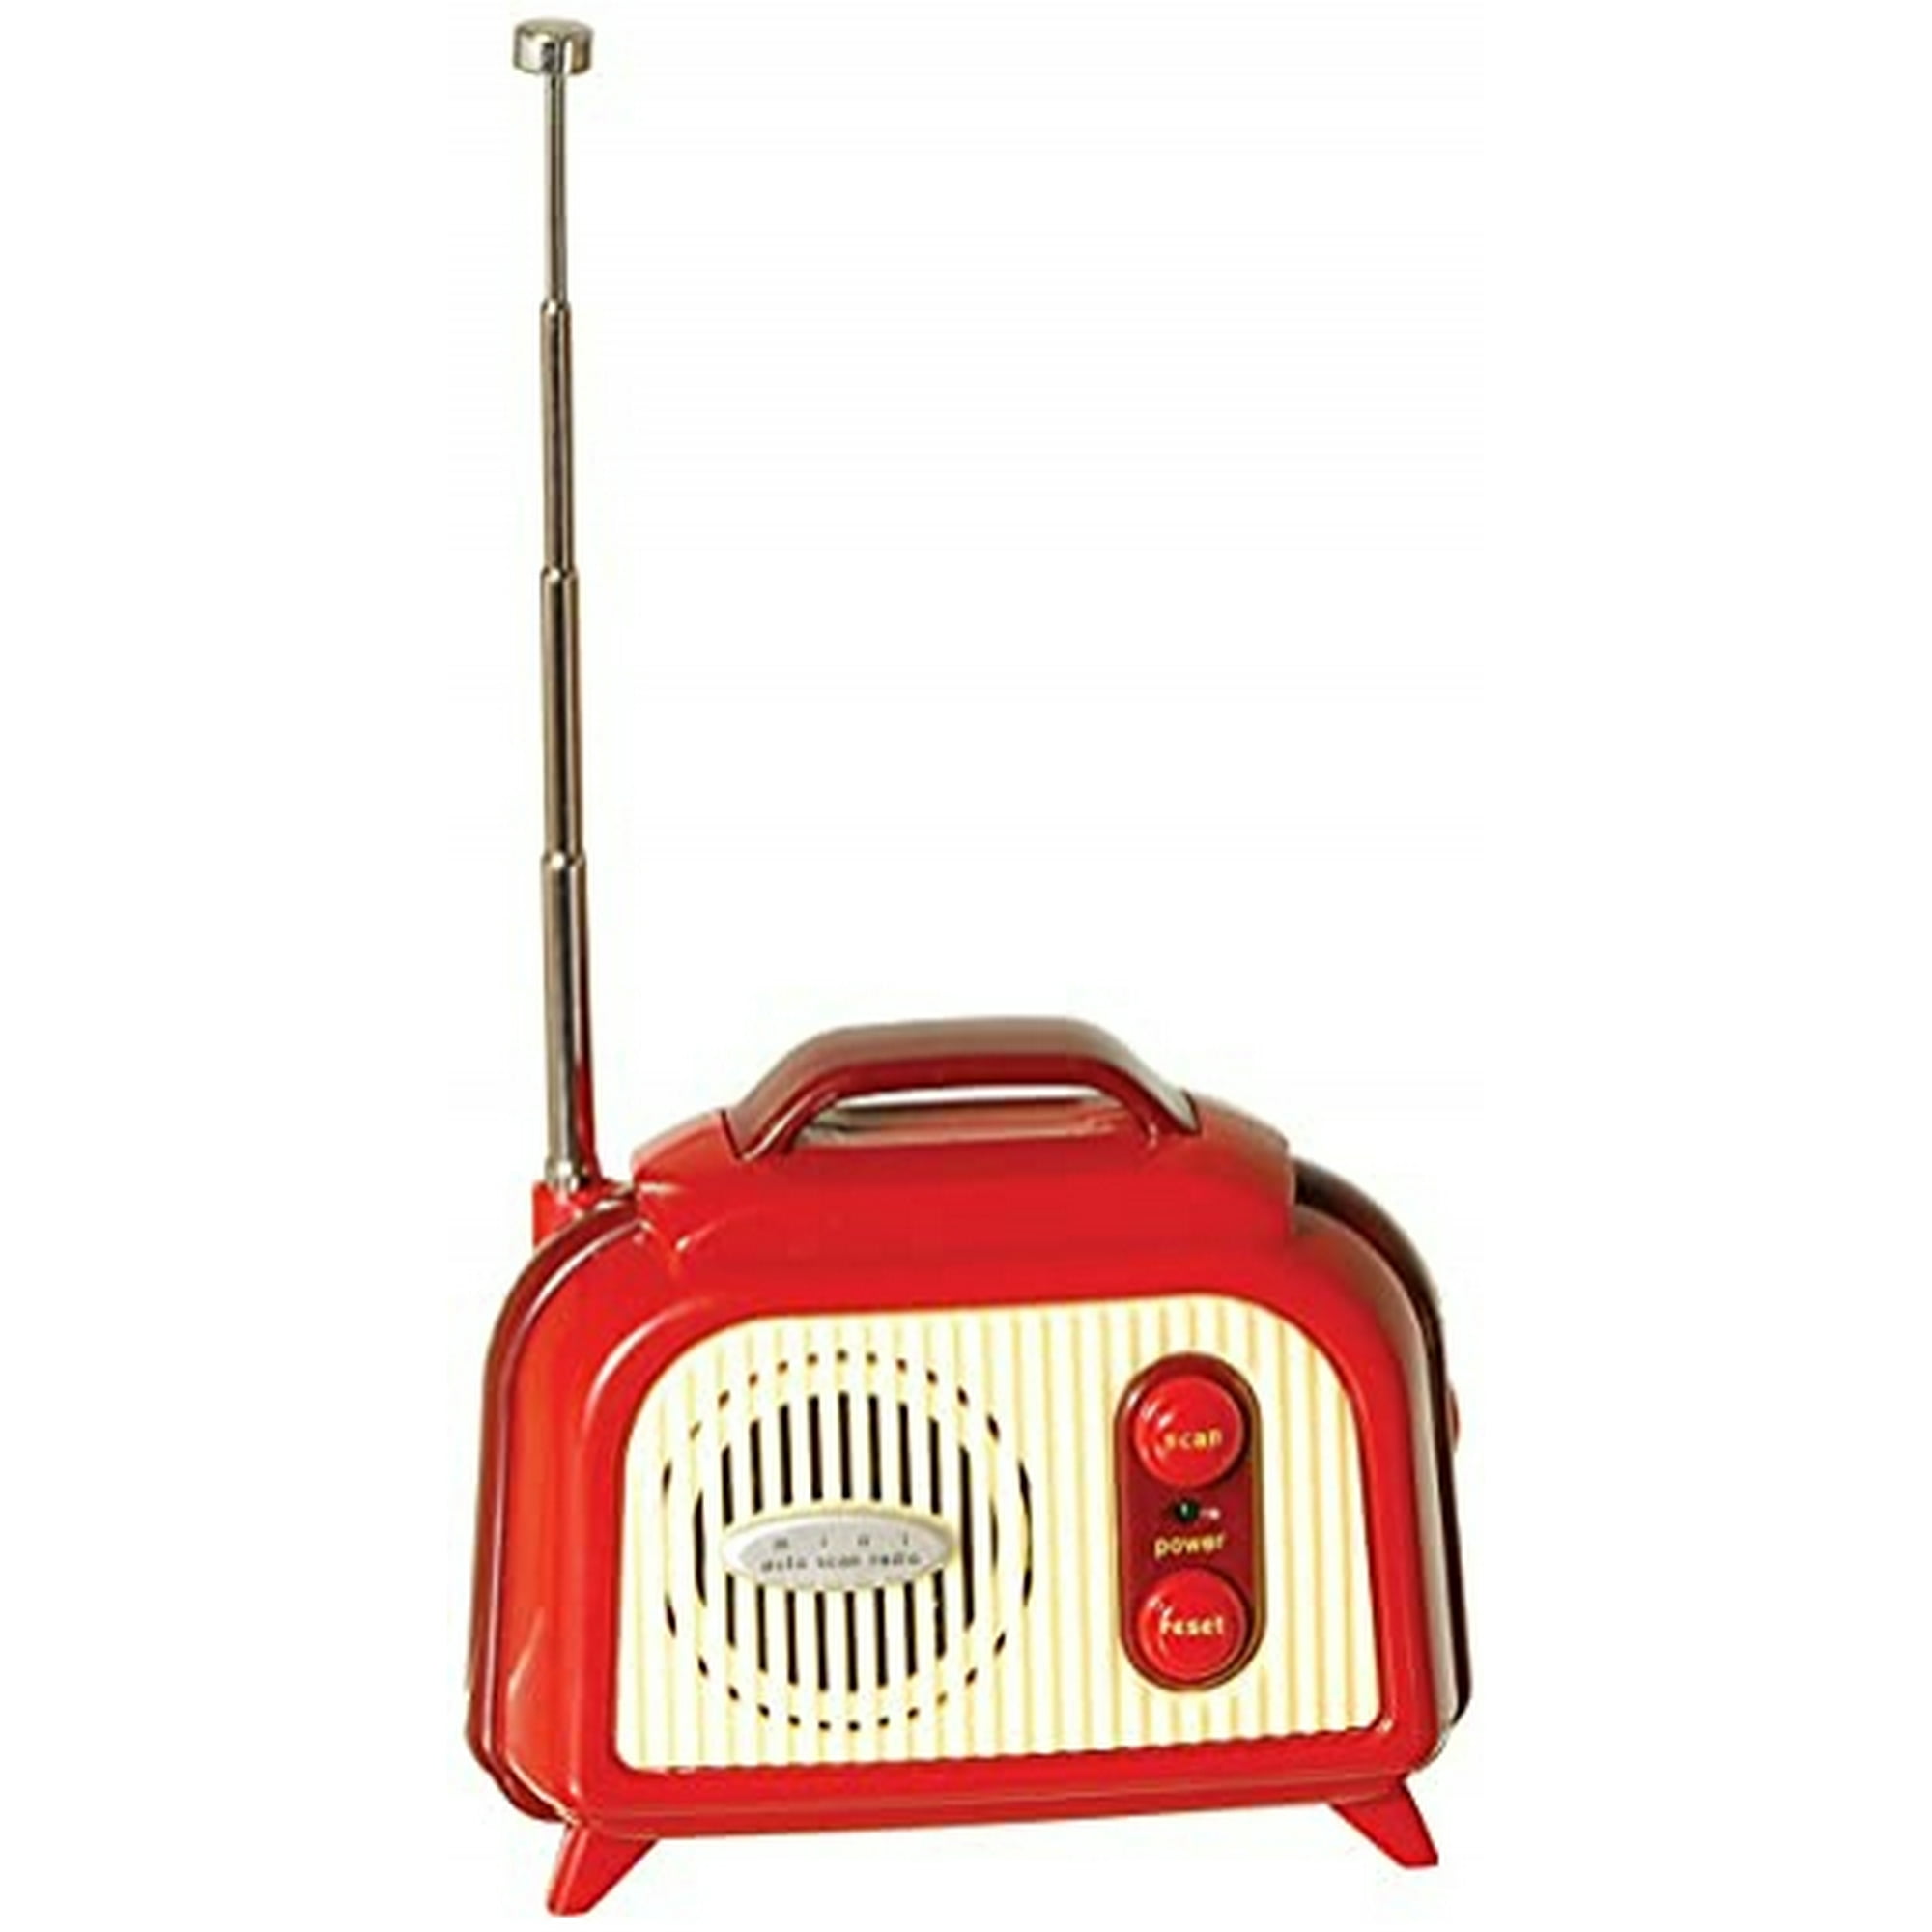 Radio de ducha, radio de baño AM FM, radio de ducha colgante impermeable,  volumen ajustable, color negro